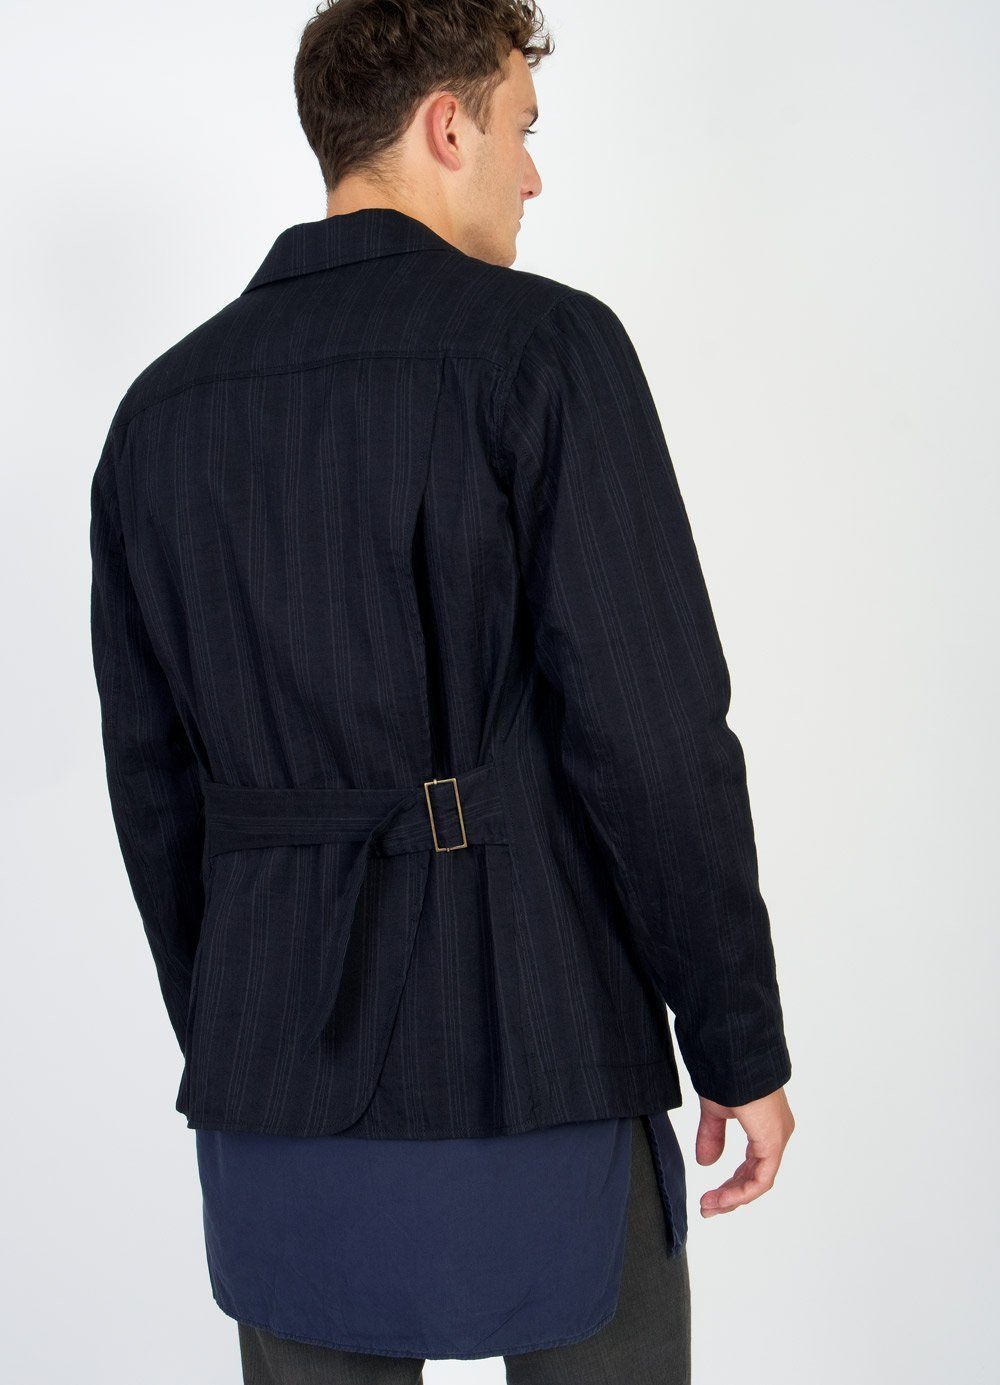 SIMON | Open Back Blazer | Black Stripe | €495 -HANSEN Garments- HANSEN Garments